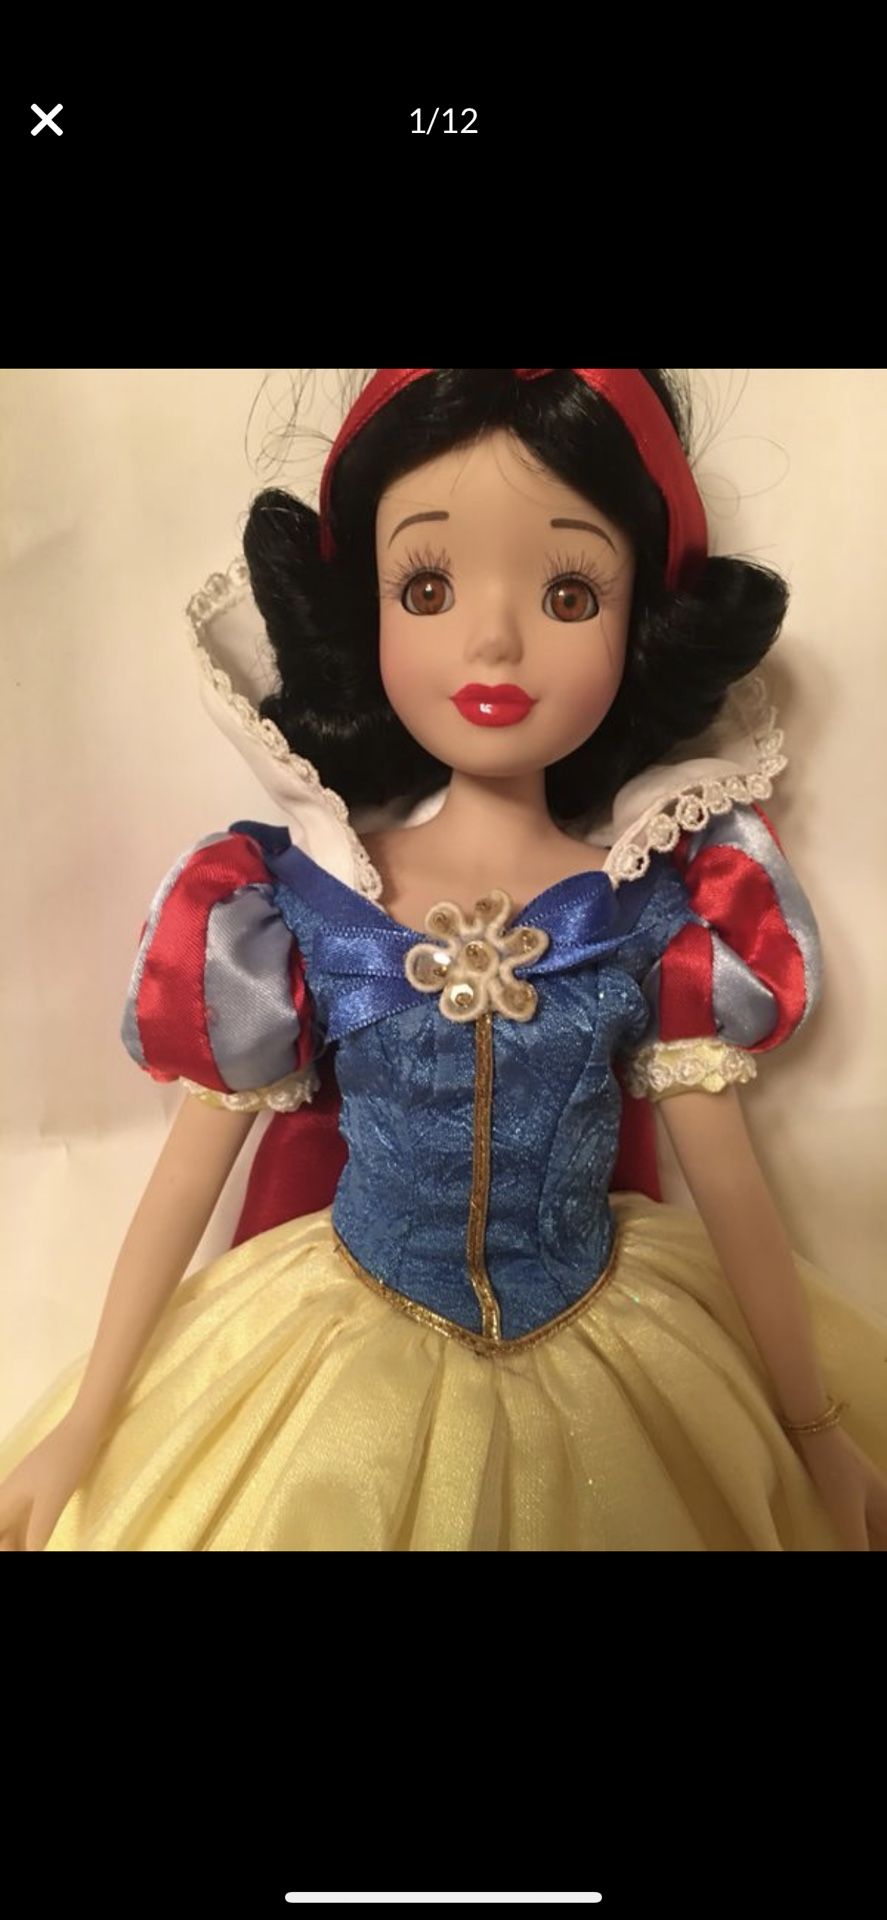 Snow White porcelain doll. Real eye lashes